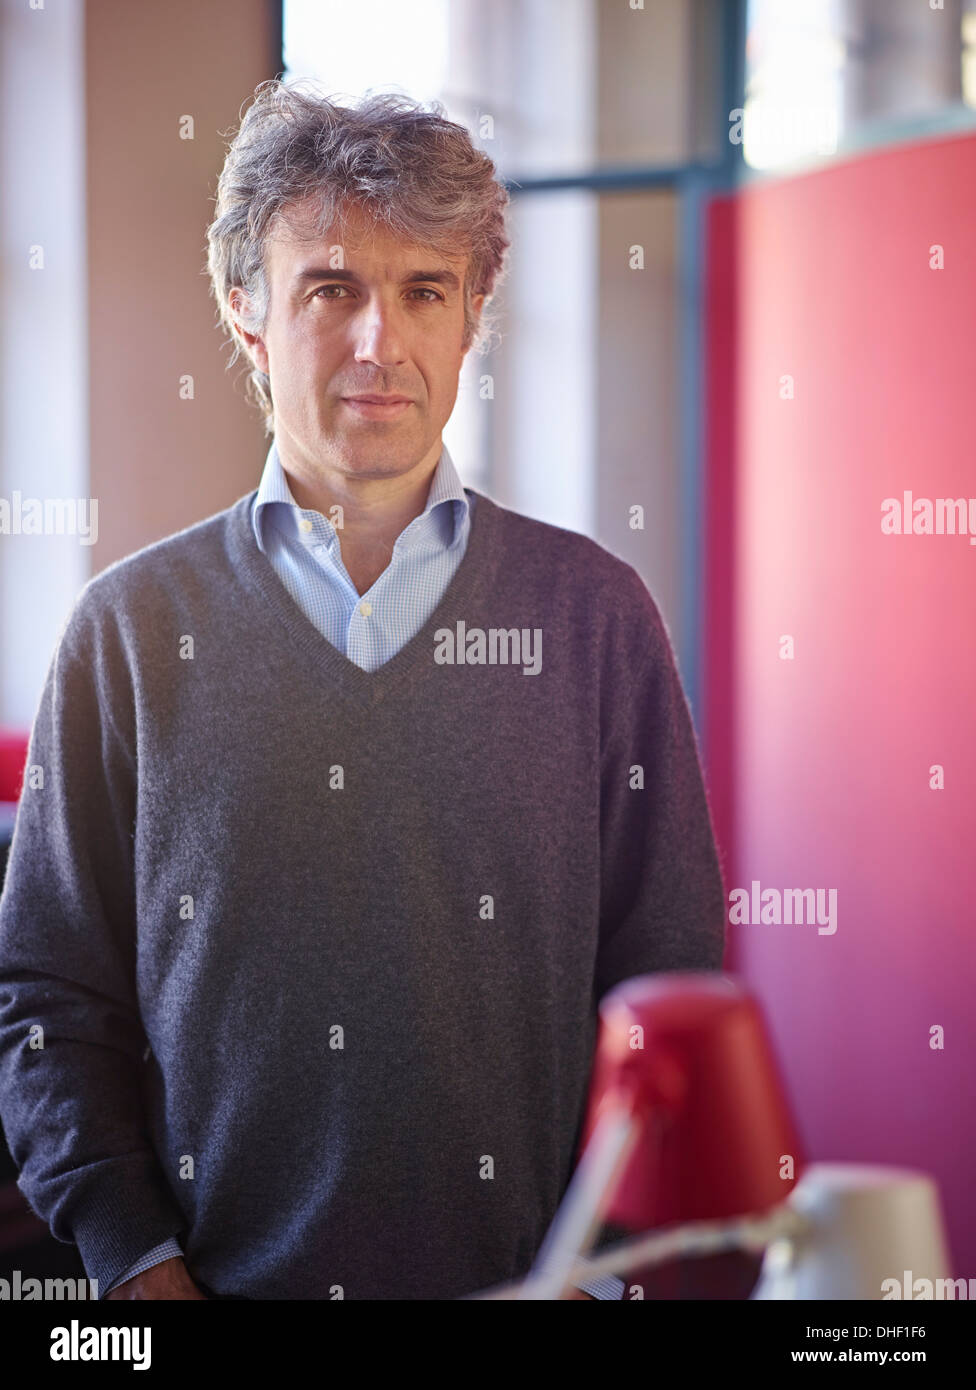 Portrait of mature businessman wearing grey jumper Stock Photo